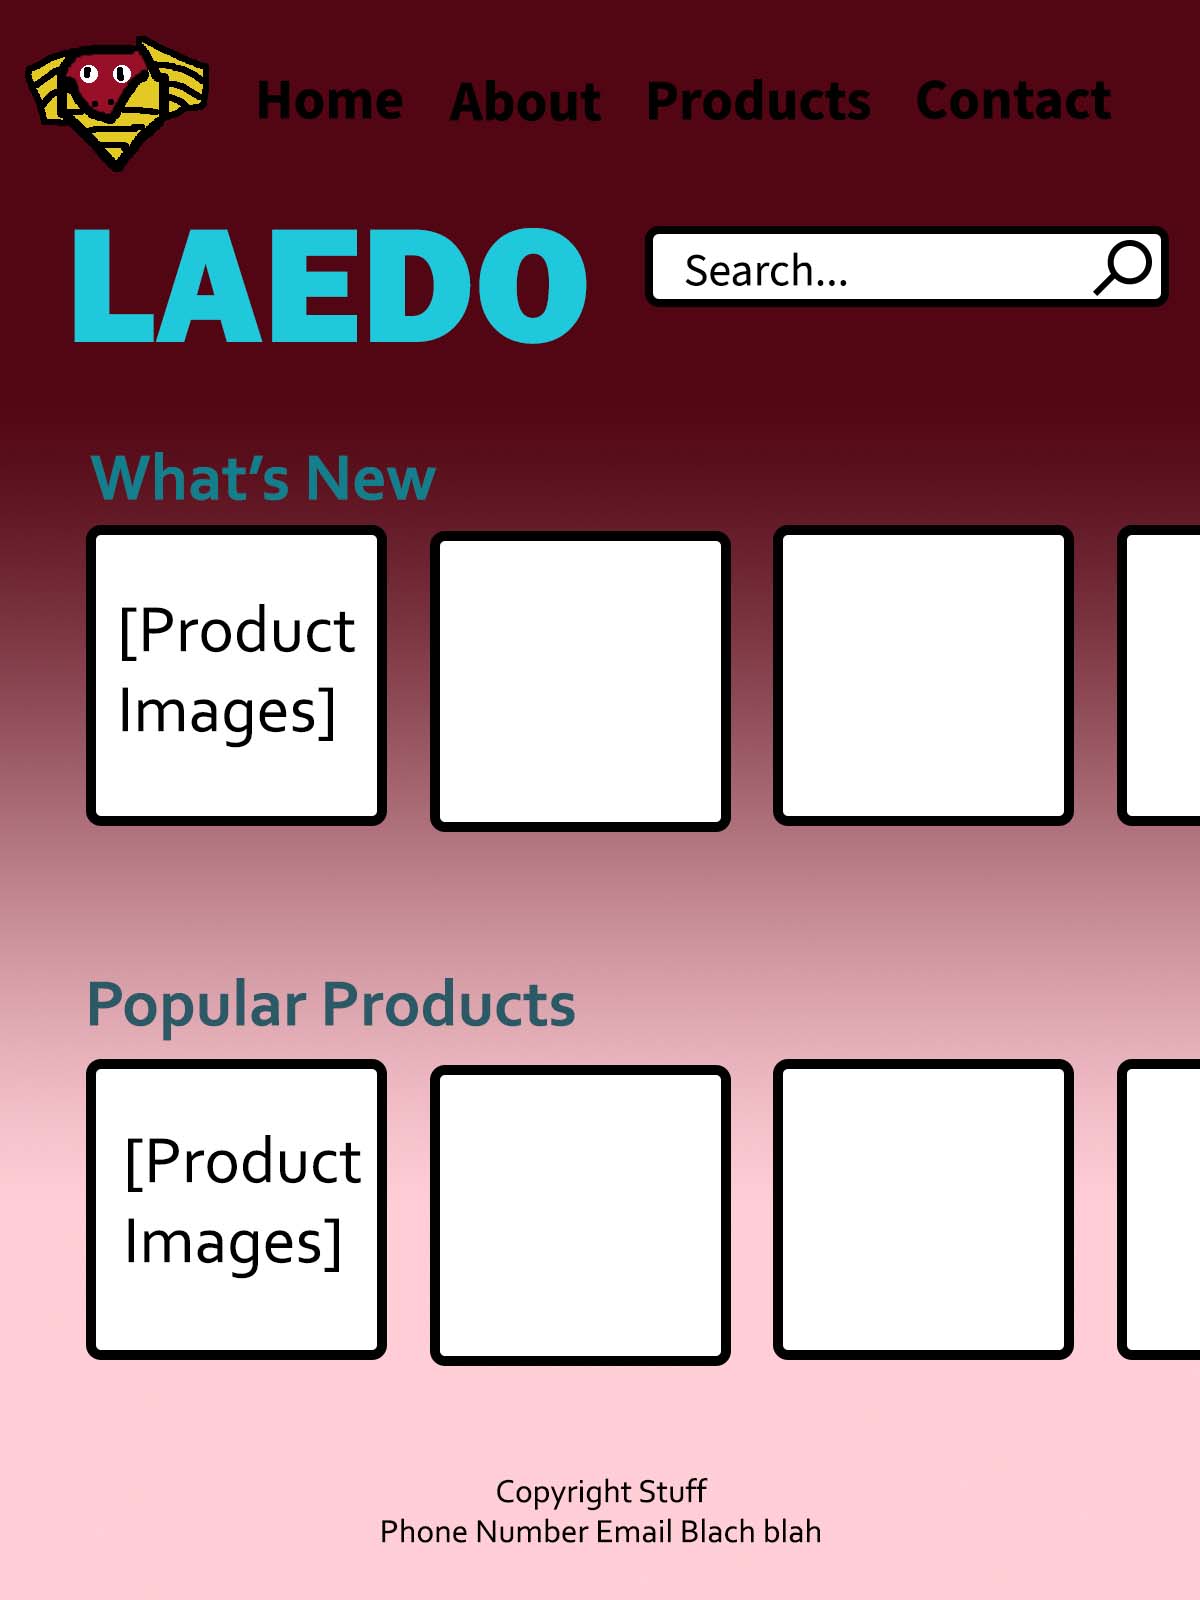 LAEDO website concept image